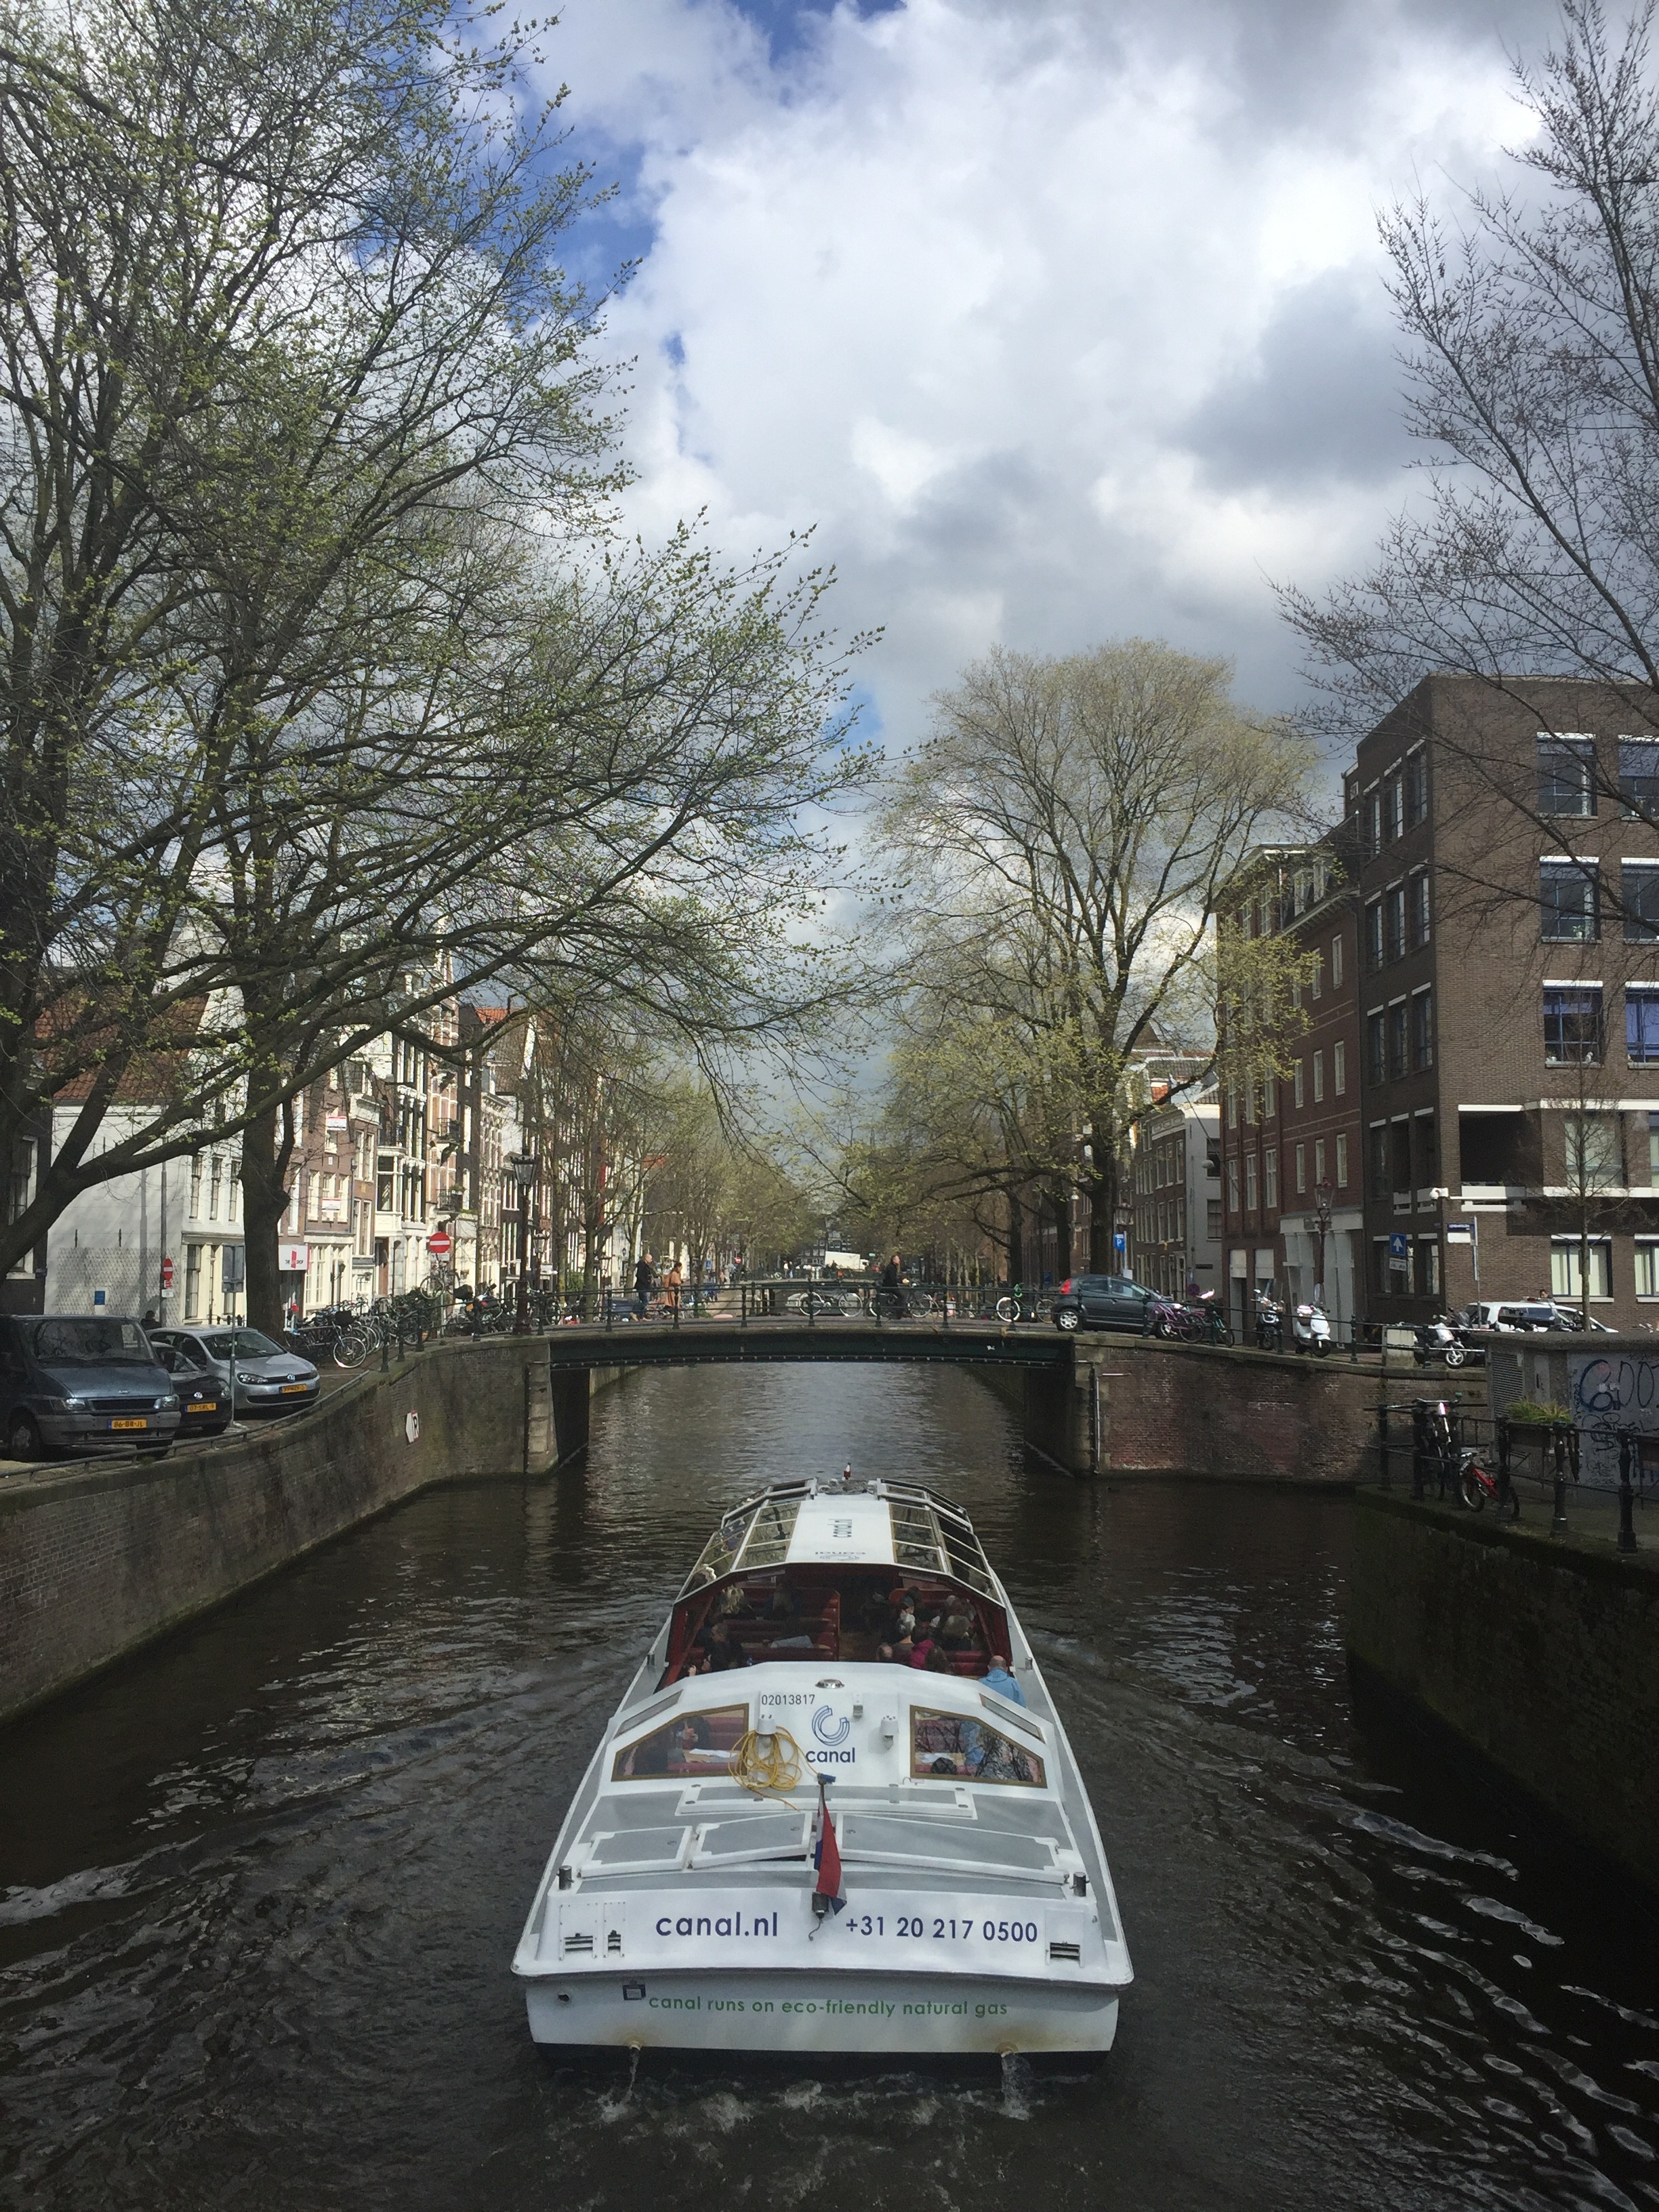 #ostockdamhagen16 Part 3: More Amsterdam!